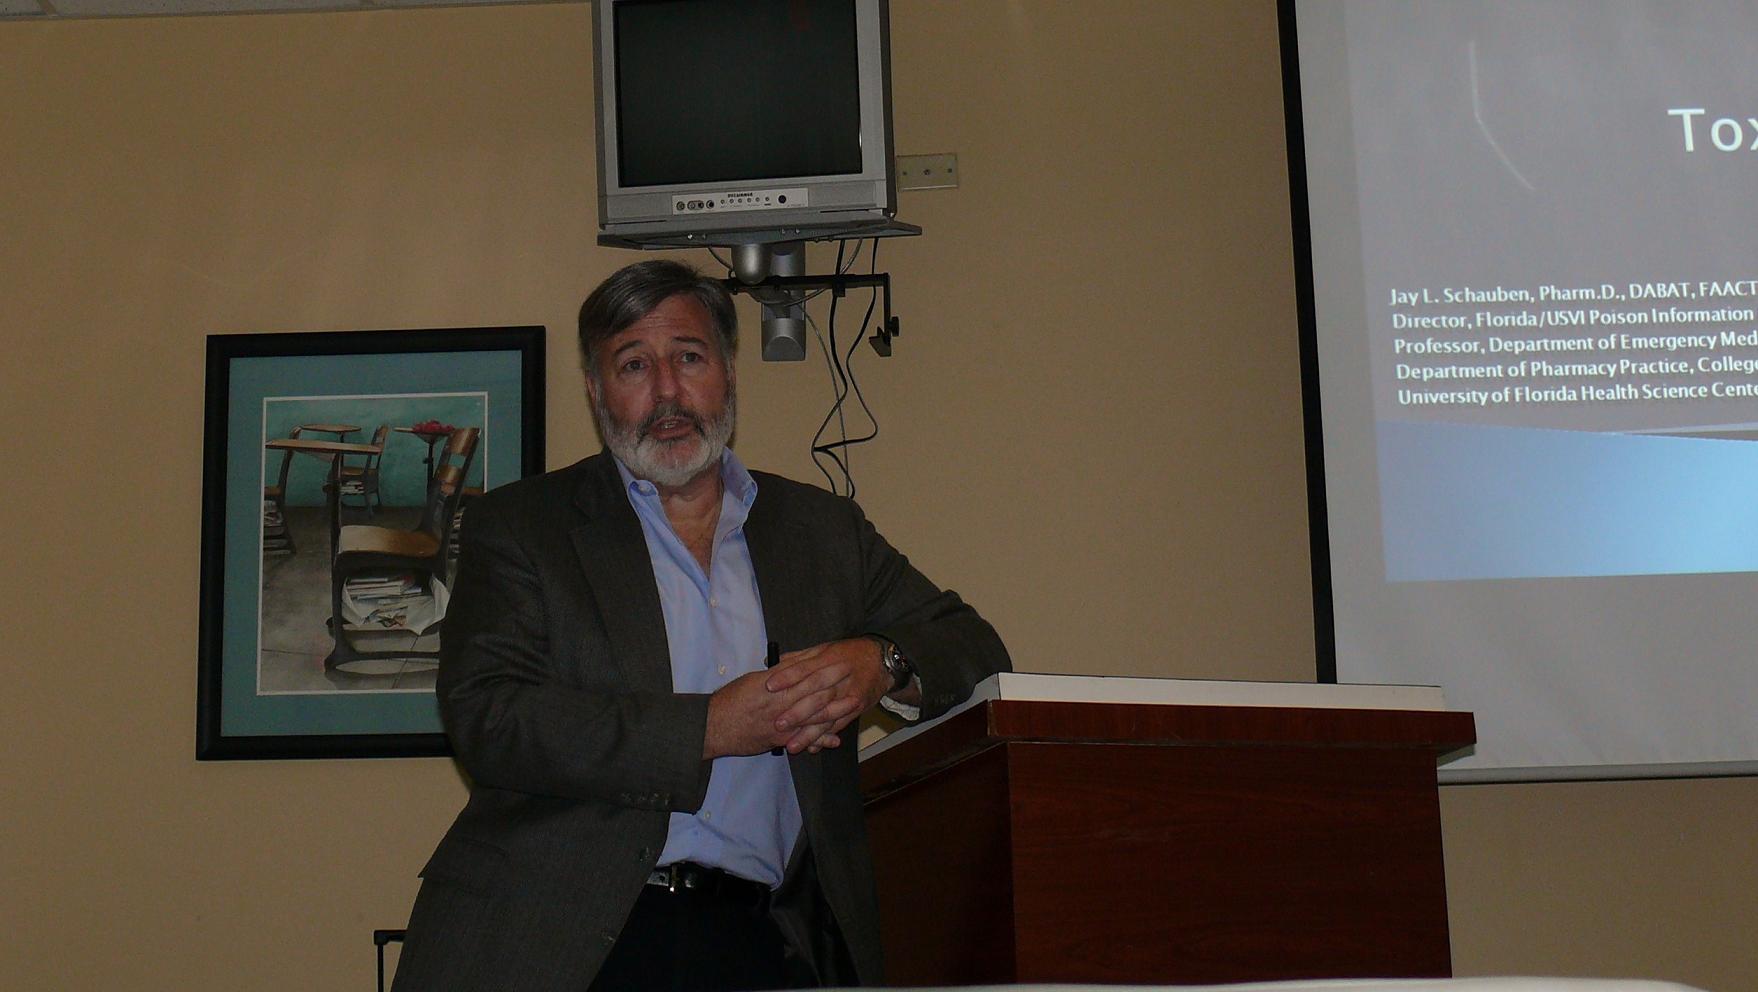 Dr. Jay Schauben, director of the Florida/USVI Poison Information Center in Jacksonville, talks about inhaled poisons.